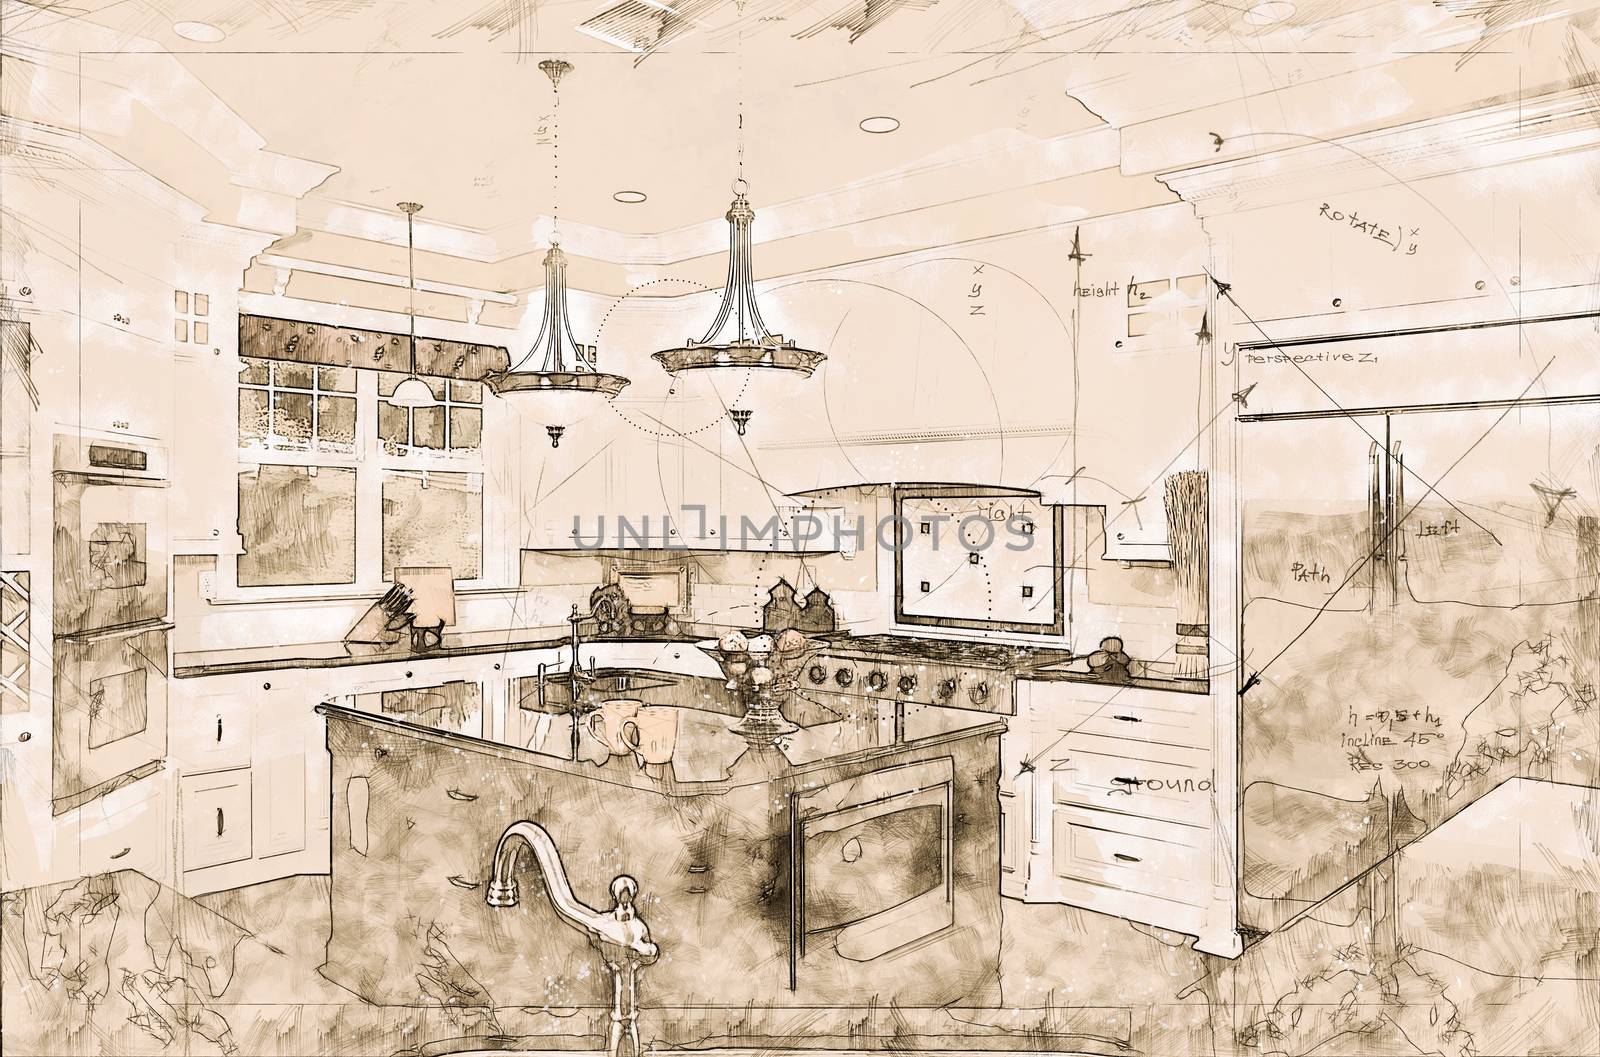 Beautiful Custom Kitchen Concept Design Drawing.